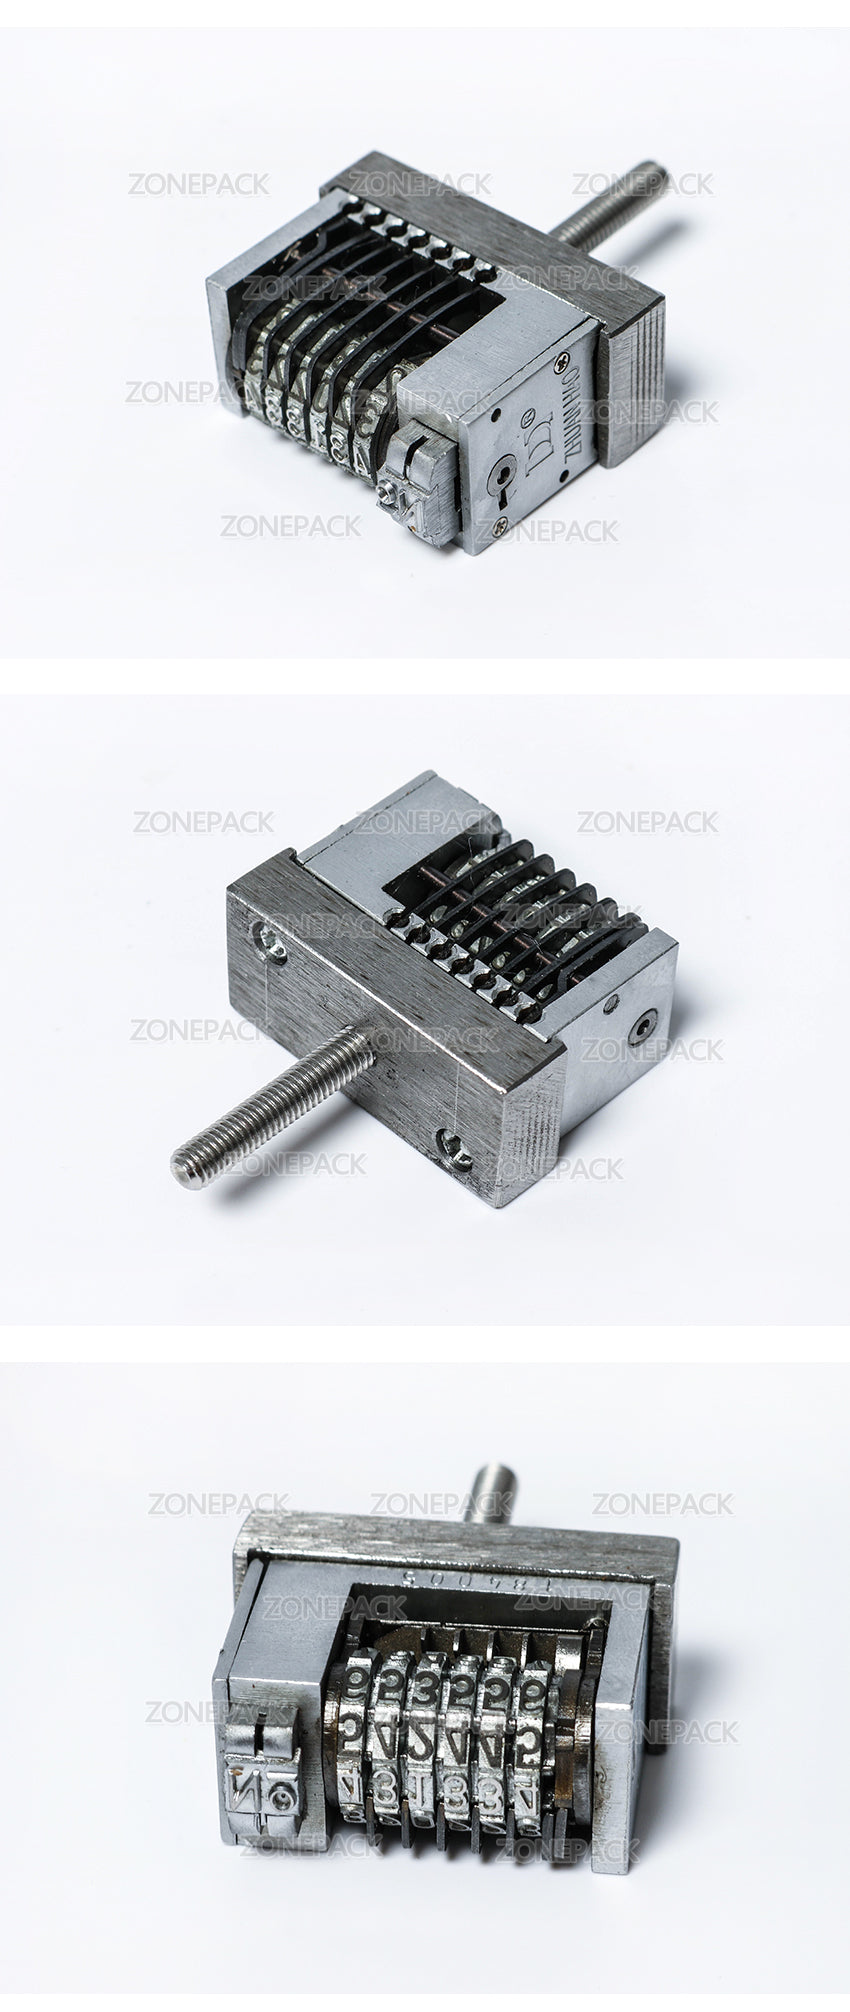 ZONEPACK Manual Hot Stamping Printer Accessory Thermal Ribbon Dialing Coding Tool Parts Production Number Coupon Print